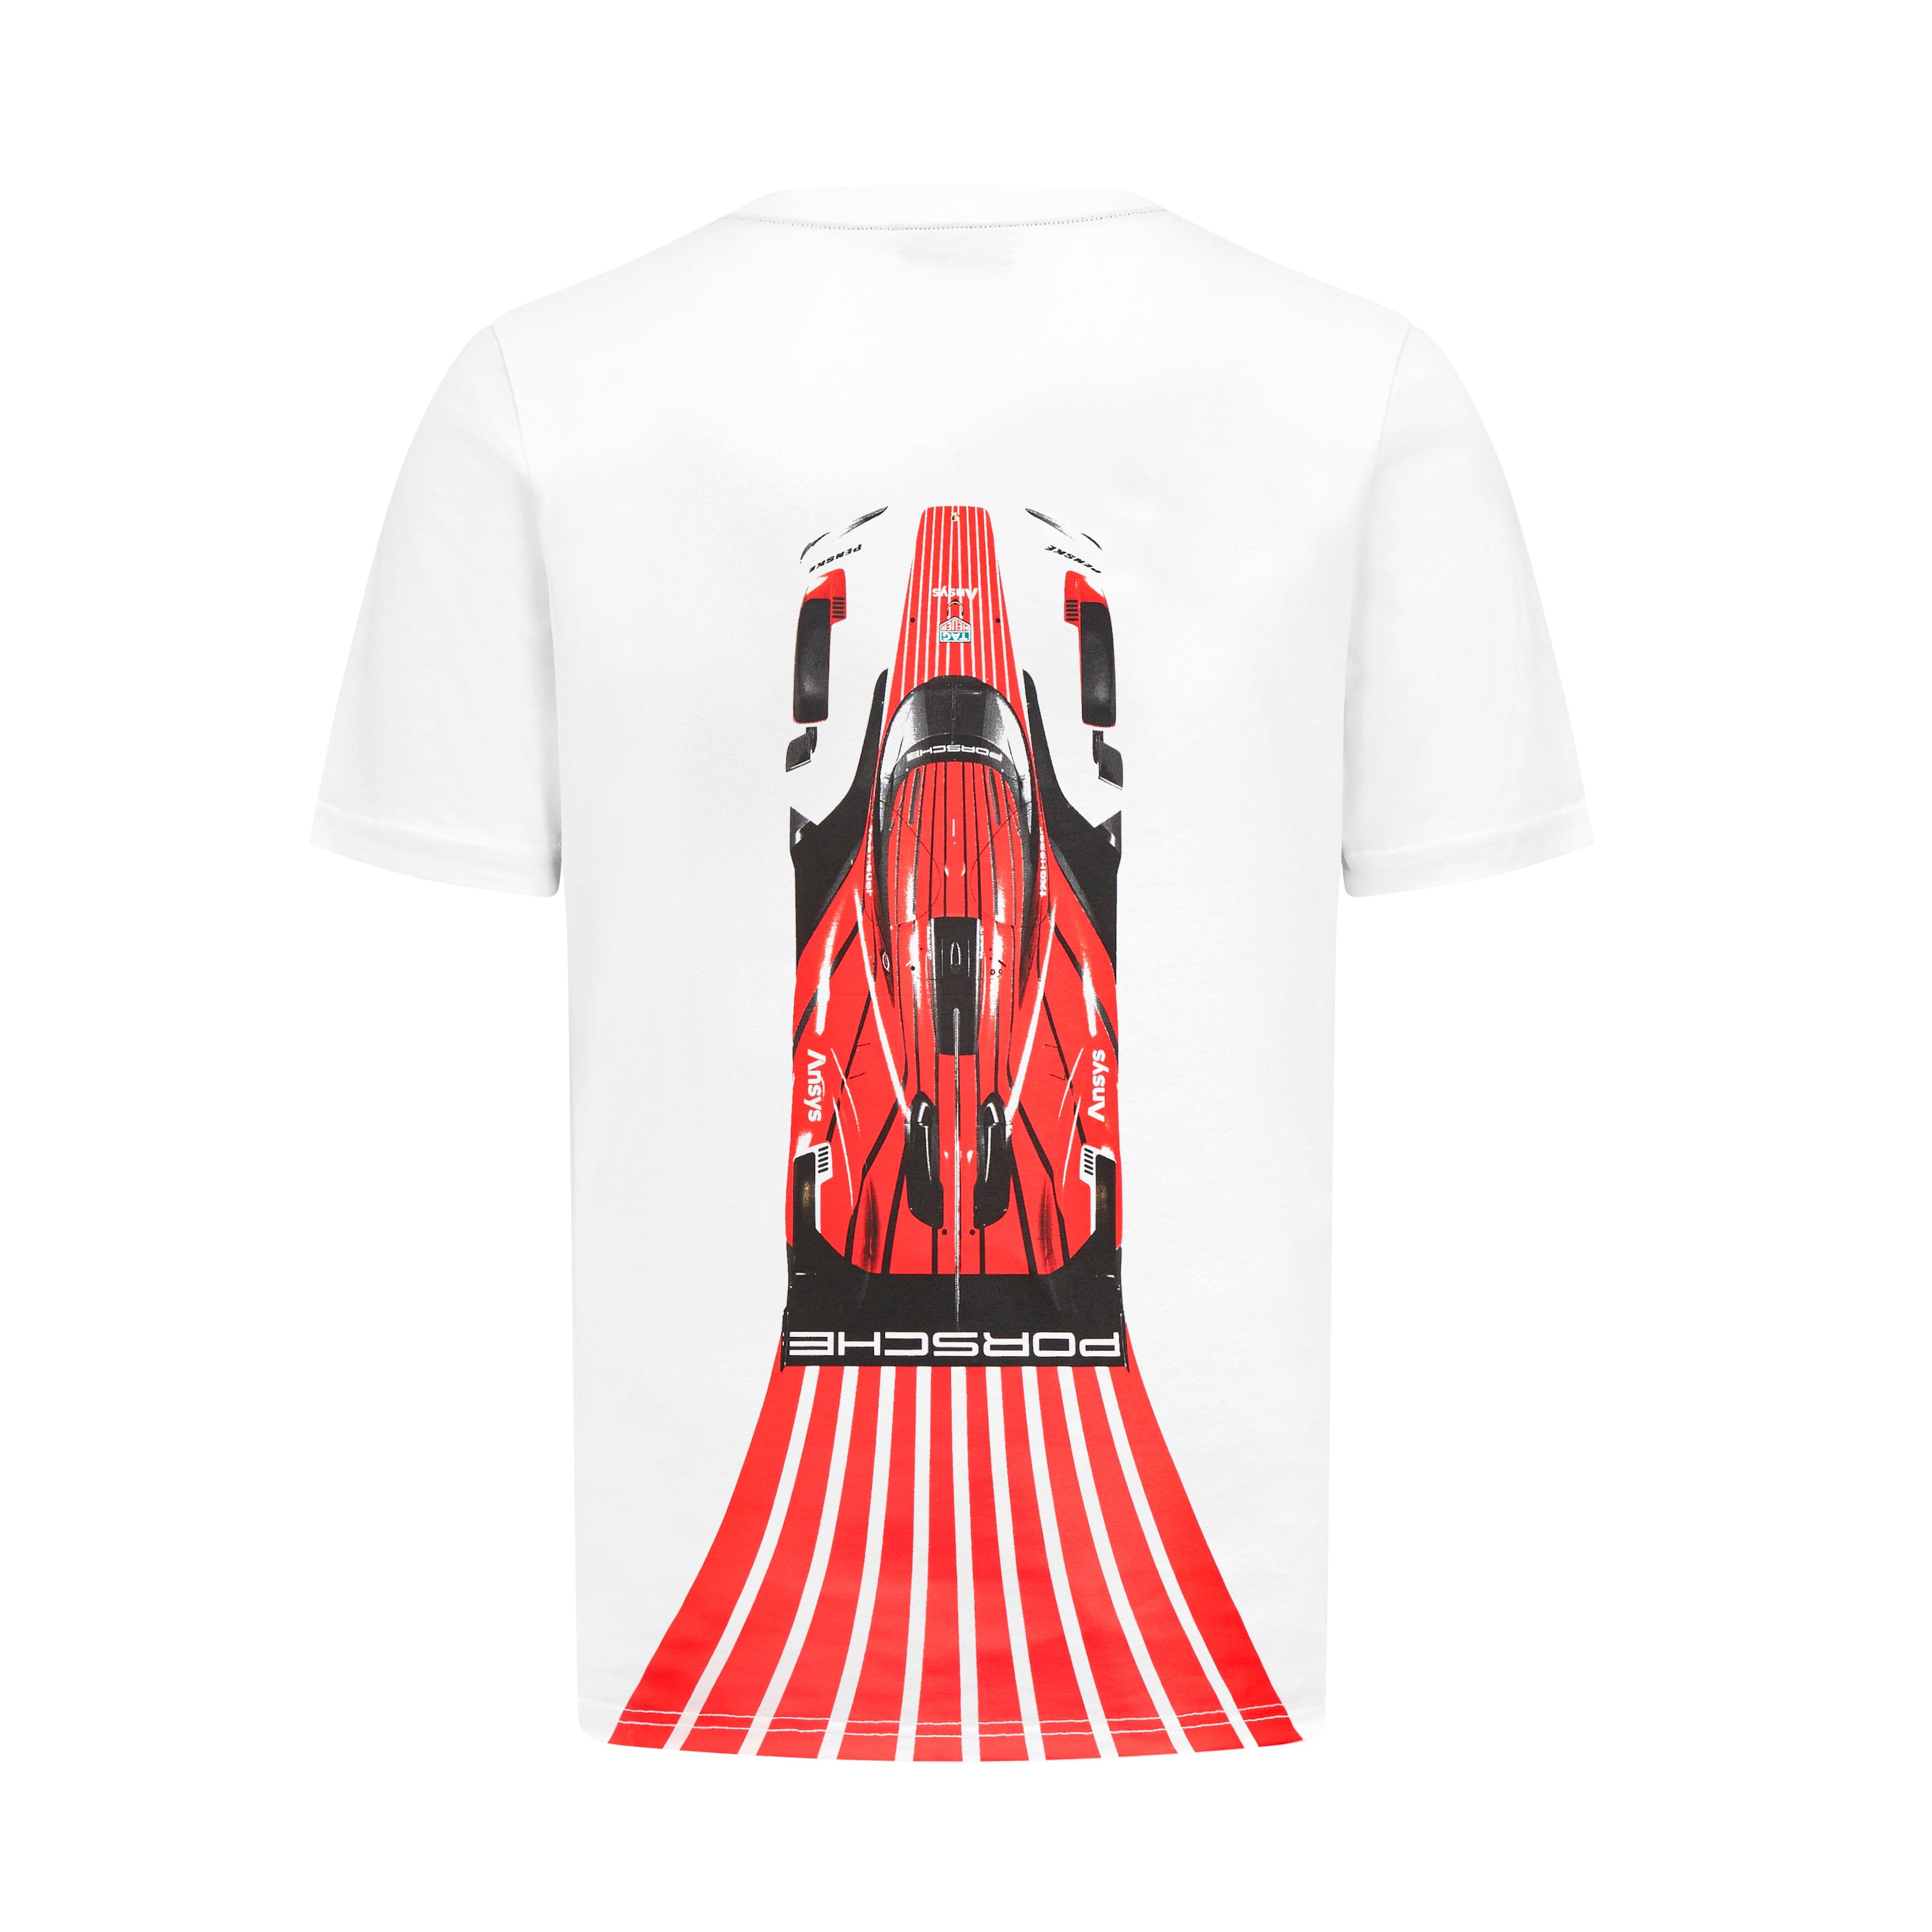 Porsche Penske Motorsport Graphic T-Shirt - White